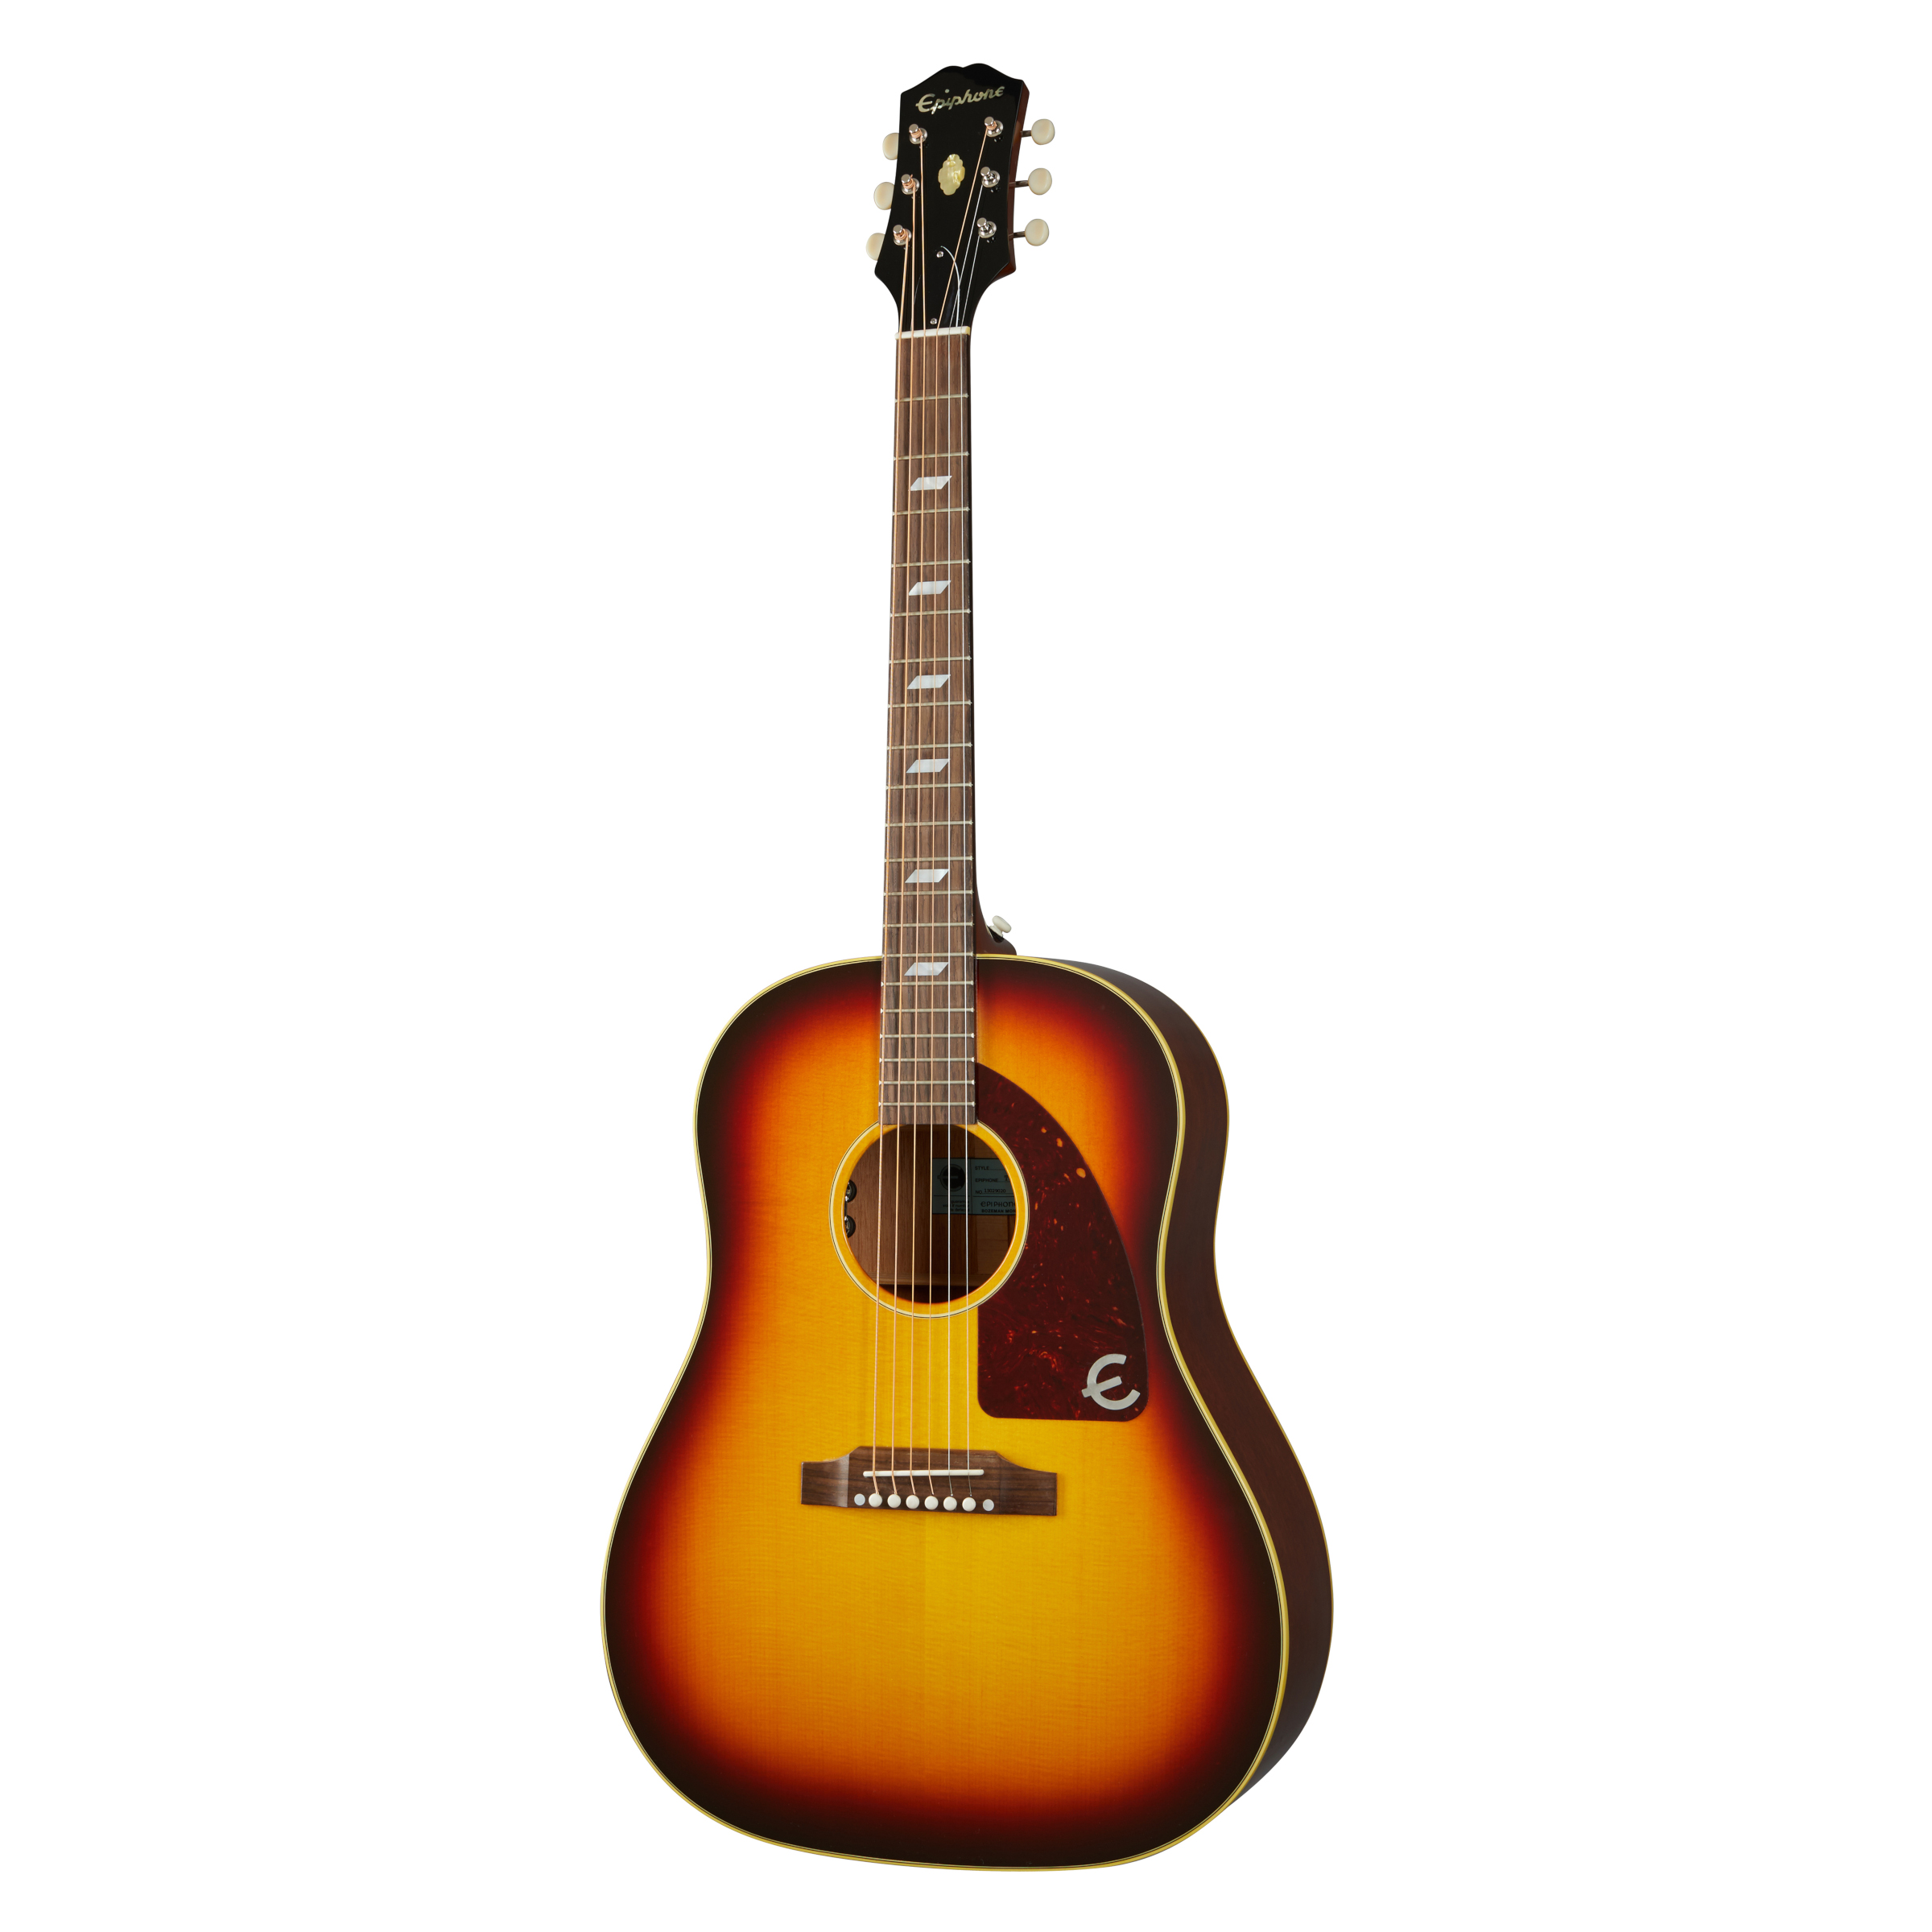 Epiphone Texan (USA) - Vintage Sunburst Guitar